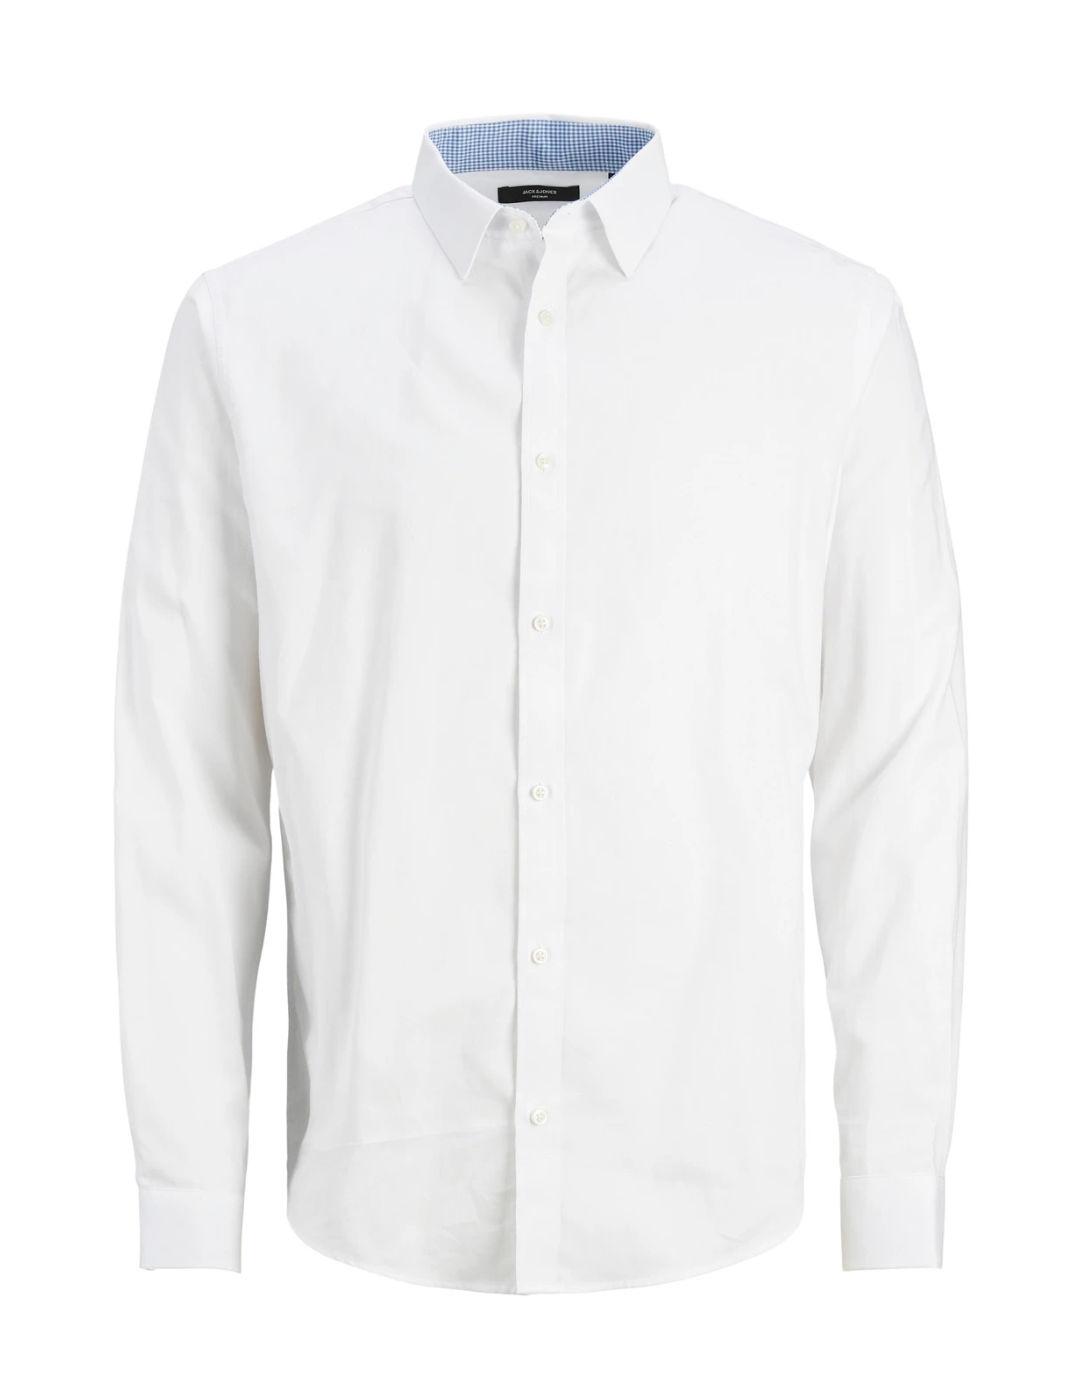 Camisa Jack&Jones manga larga oxford blanca para hombre